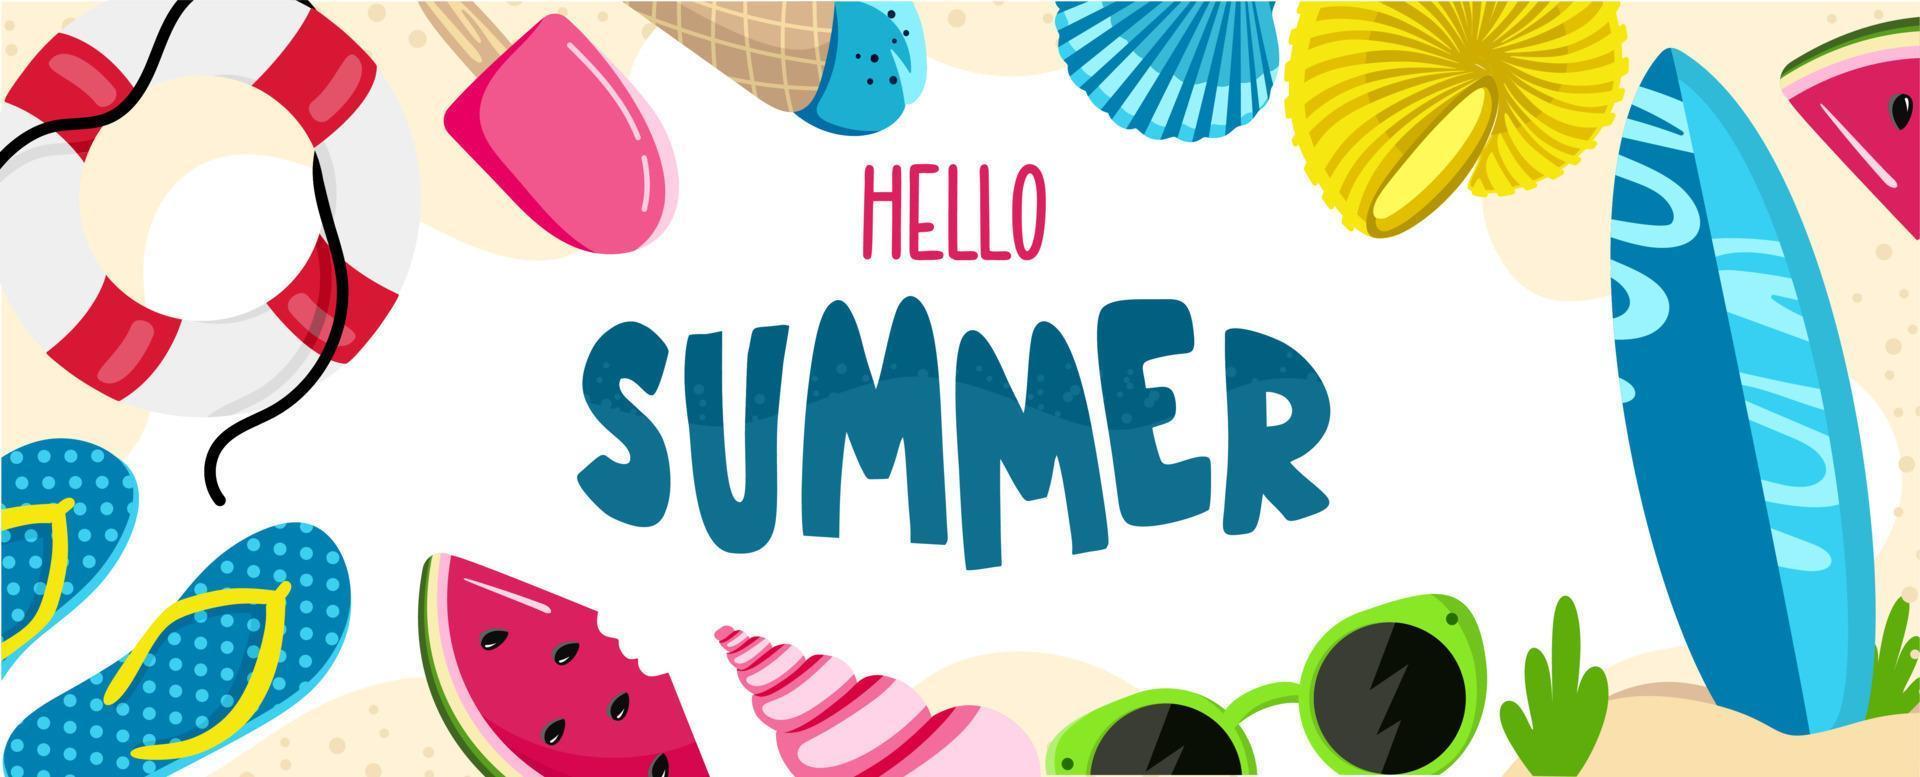 fondo de verano sitio web encabezado colorido horizontal postal banner vector ilustración en estilo plano